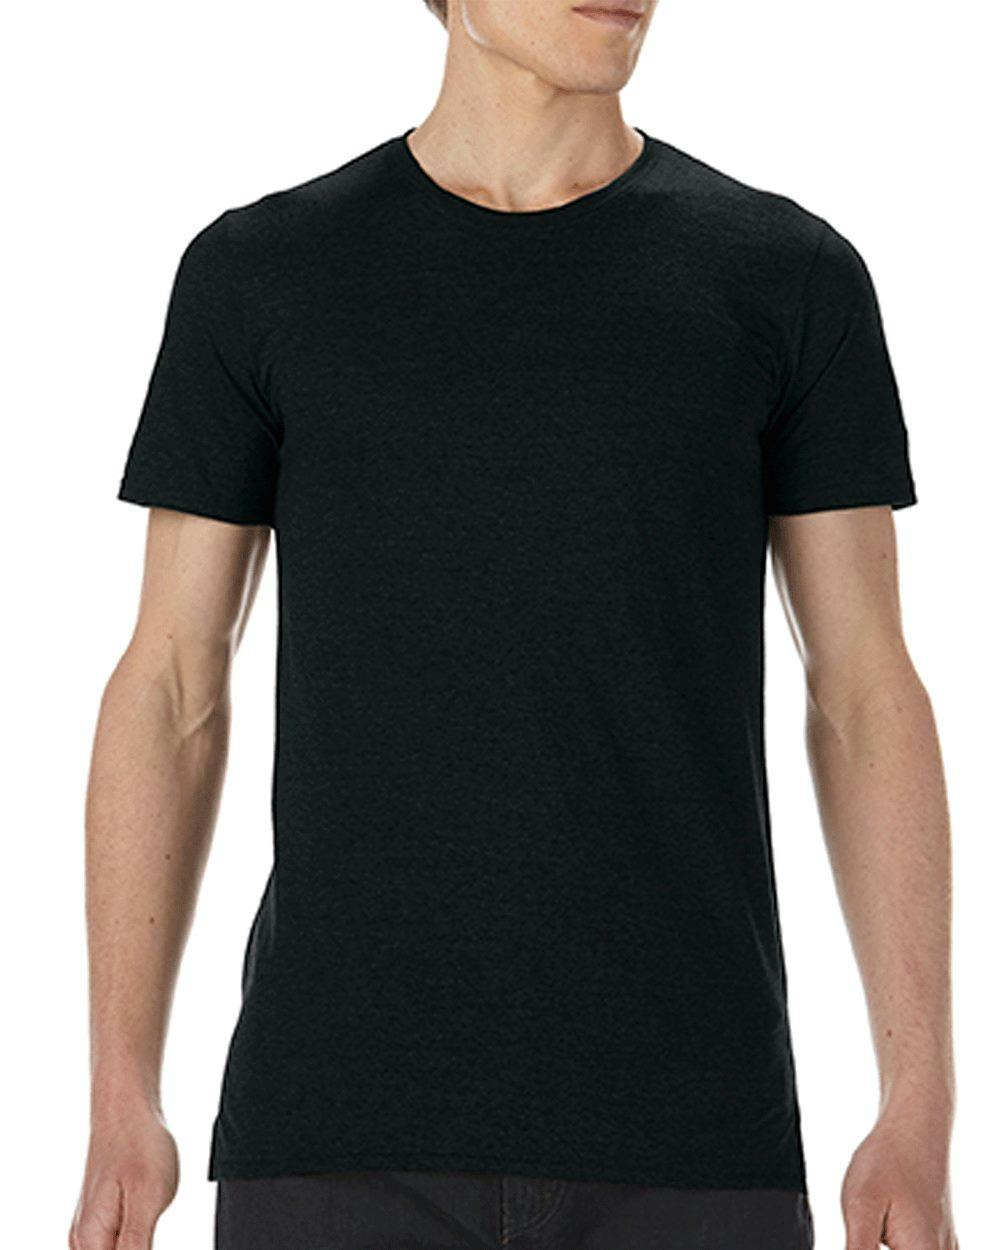 Image for Lightweight Long & Lean T-Shirt - 5624